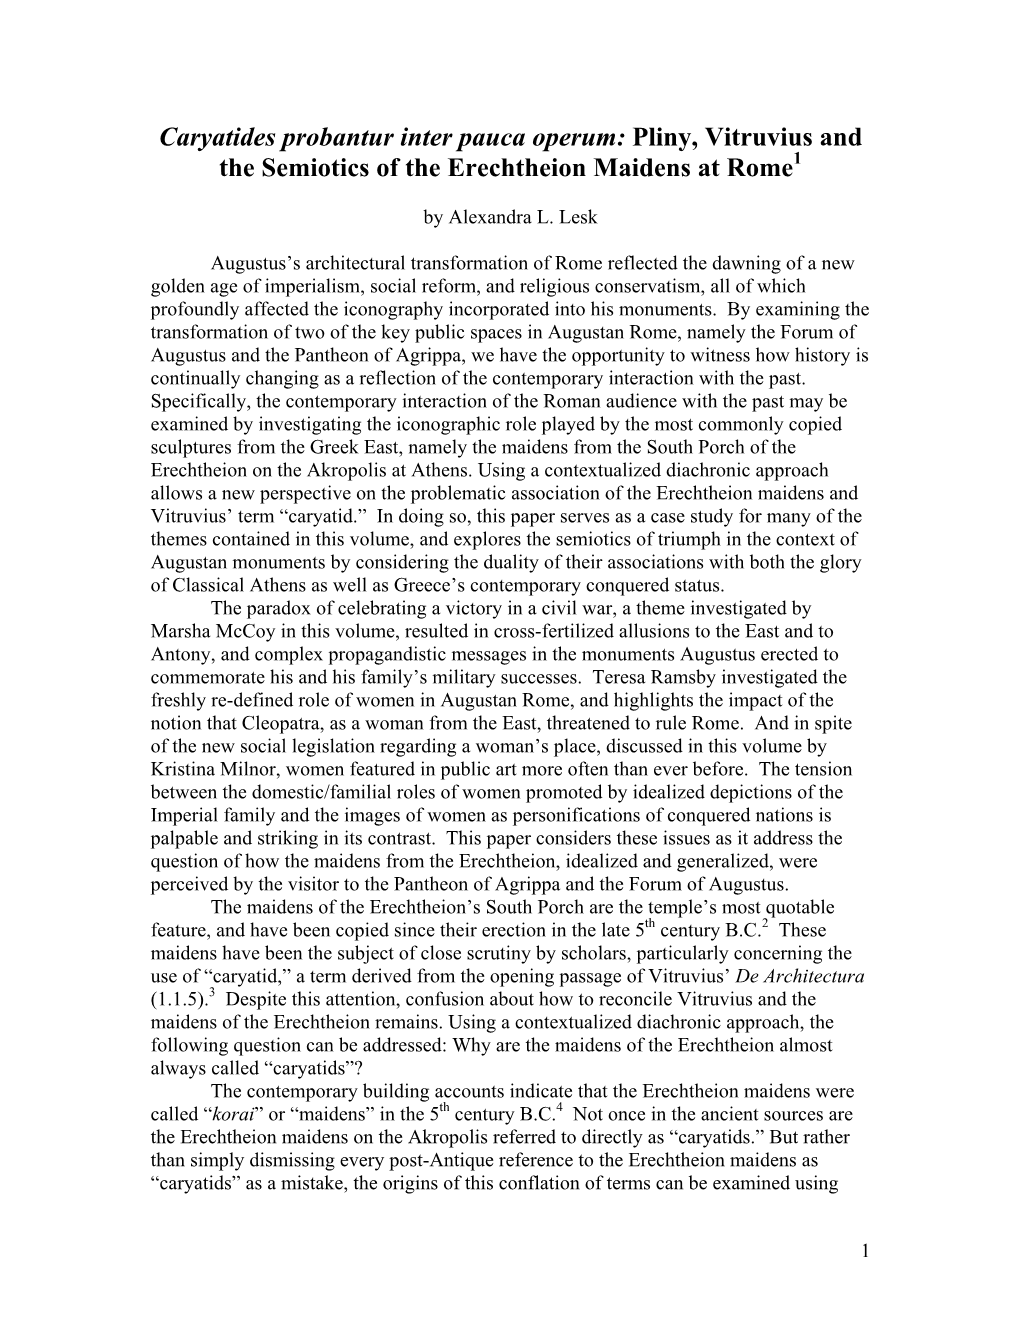 Caryatides Probantur Inter Pauca Operum: Pliny, Vitruvius and the Semiotics of the Erechtheion Maidens at Rome1